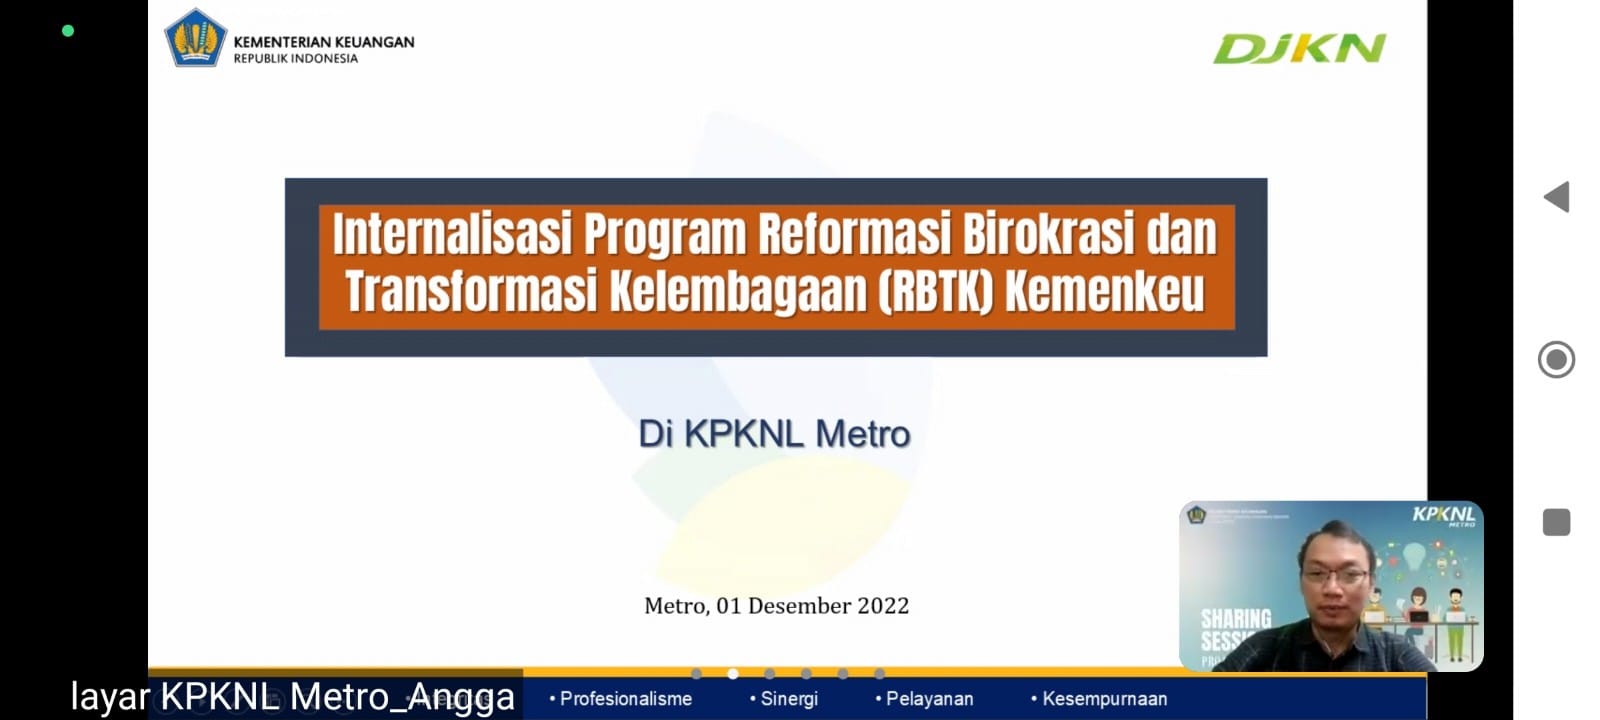 Internalisasi Program RBTK Transformasi Kelembagaan di KPKNL Metro